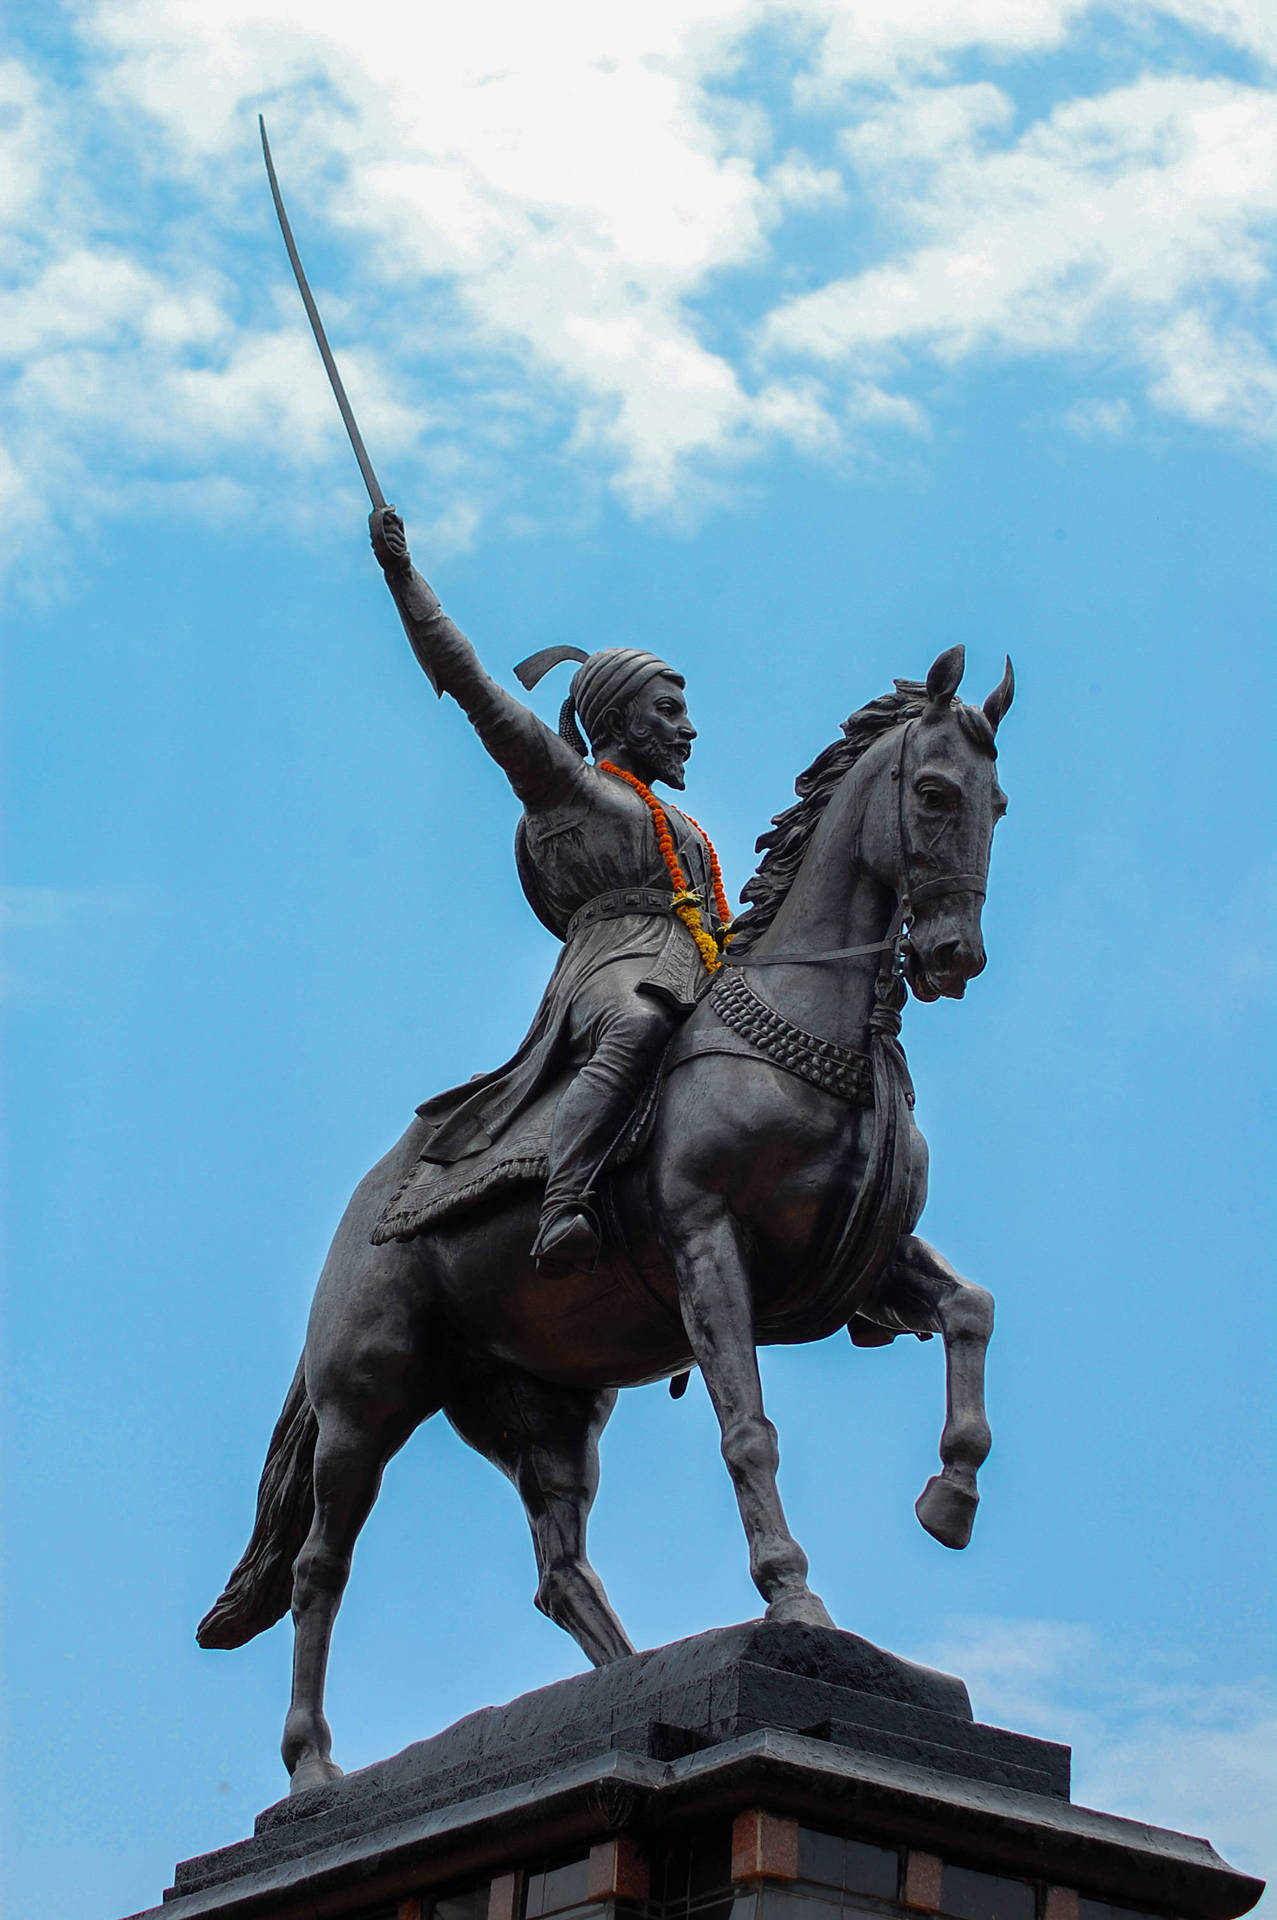 Caption: Majestic Chhatrapati Shivaji Maharaj Statue Riding On Horseback Background